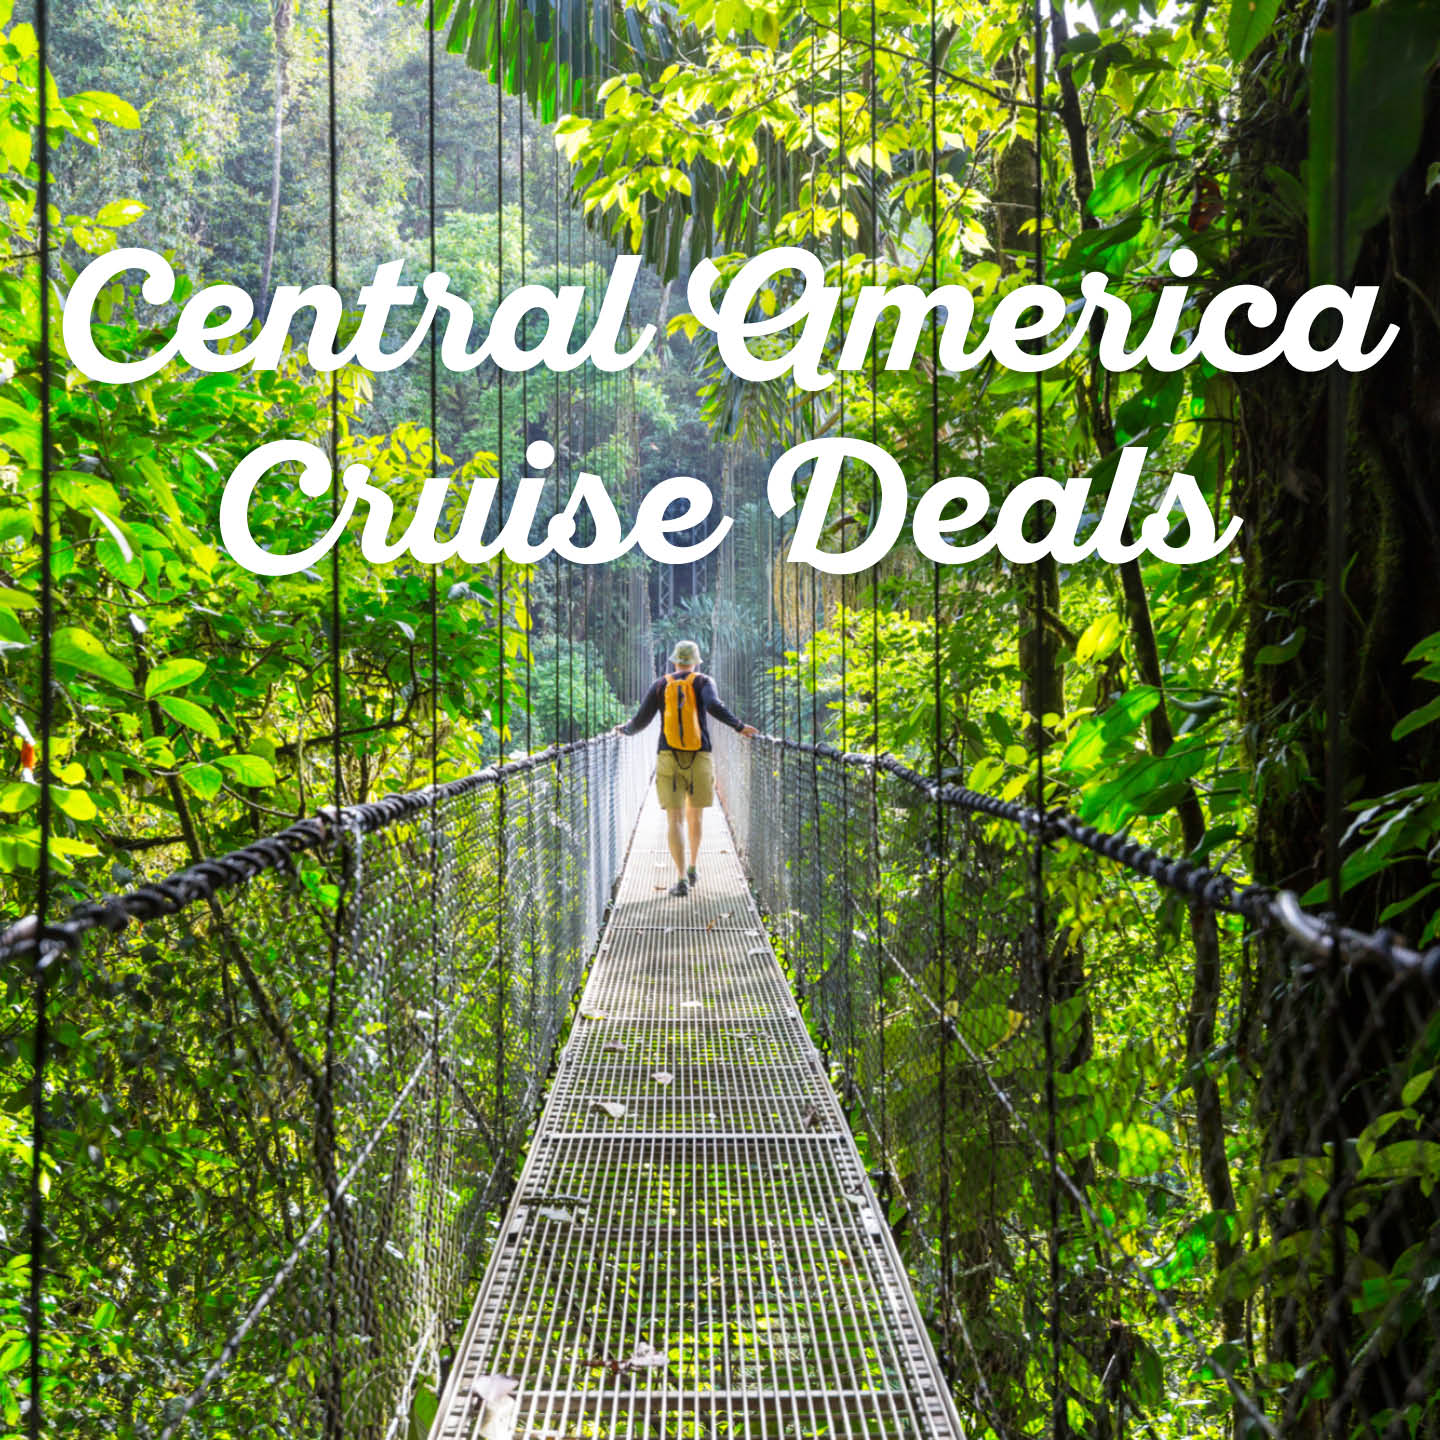 central-america-cruise-deals1-thumb.jpg